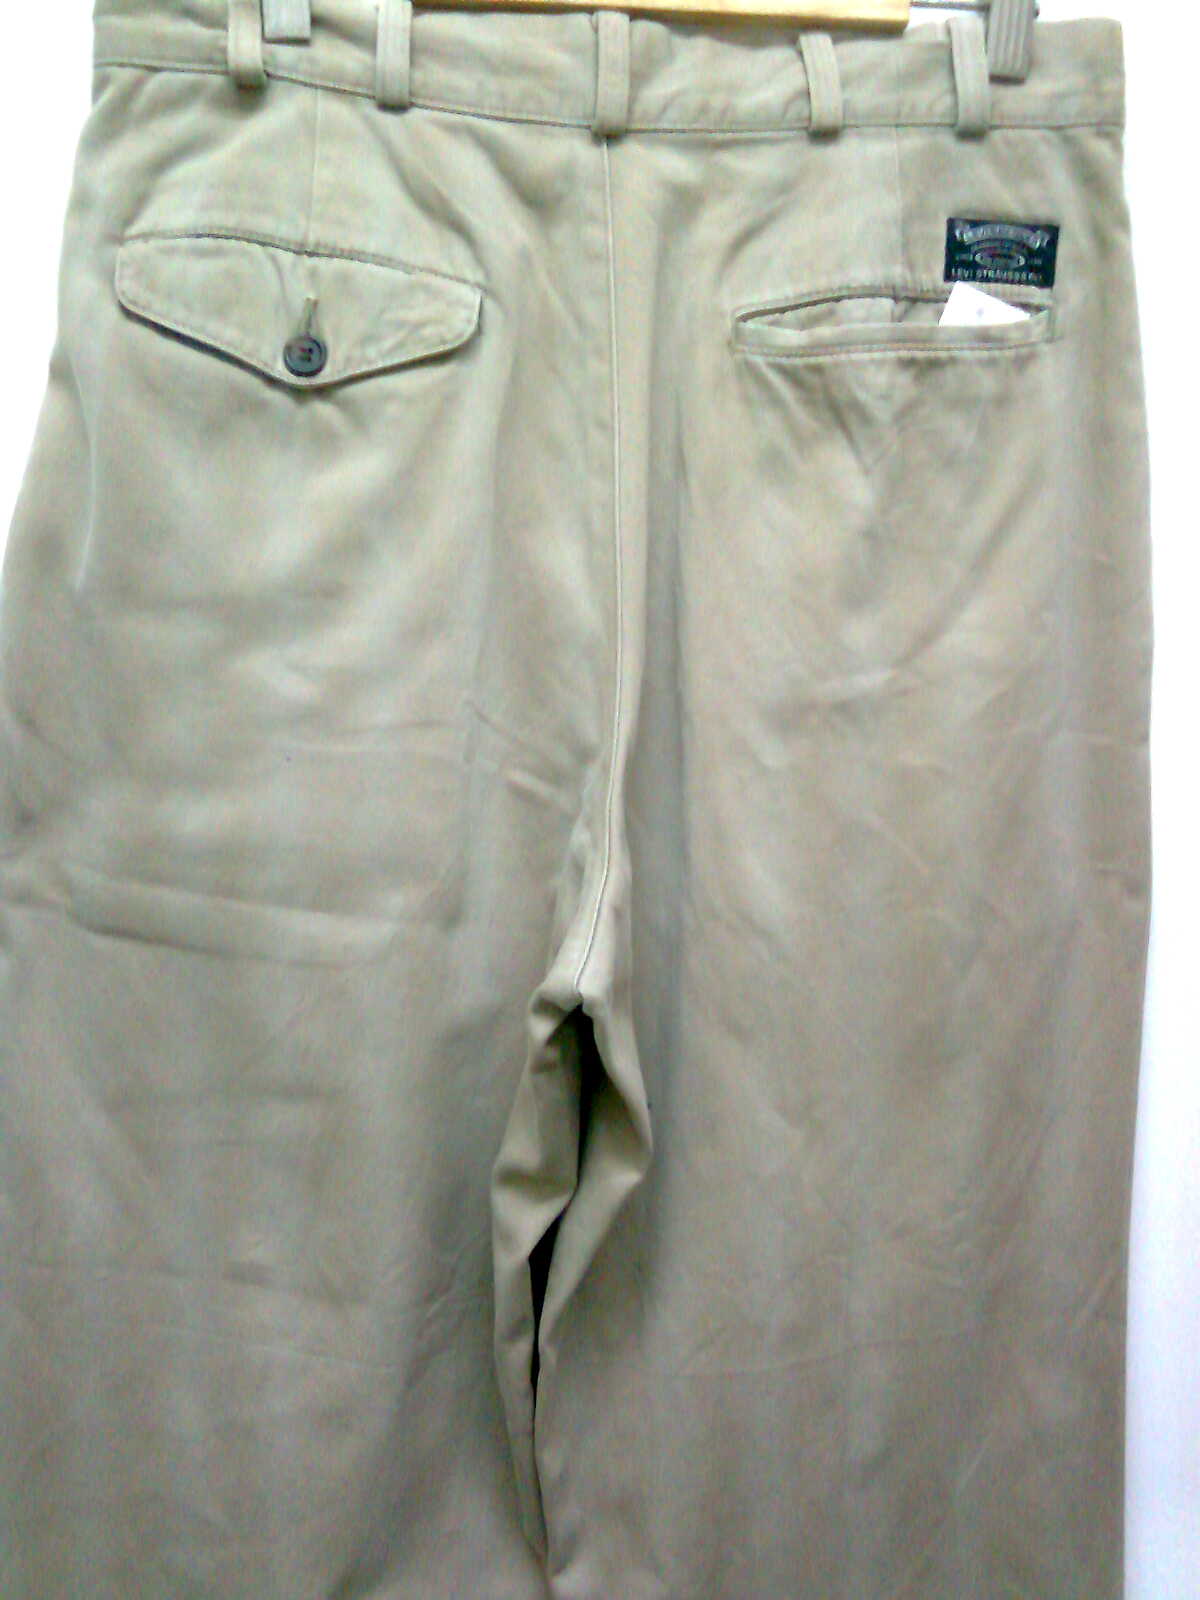 Rakutanstock.Com: LEVIS OFFICER(used) Pants[W30xL27]